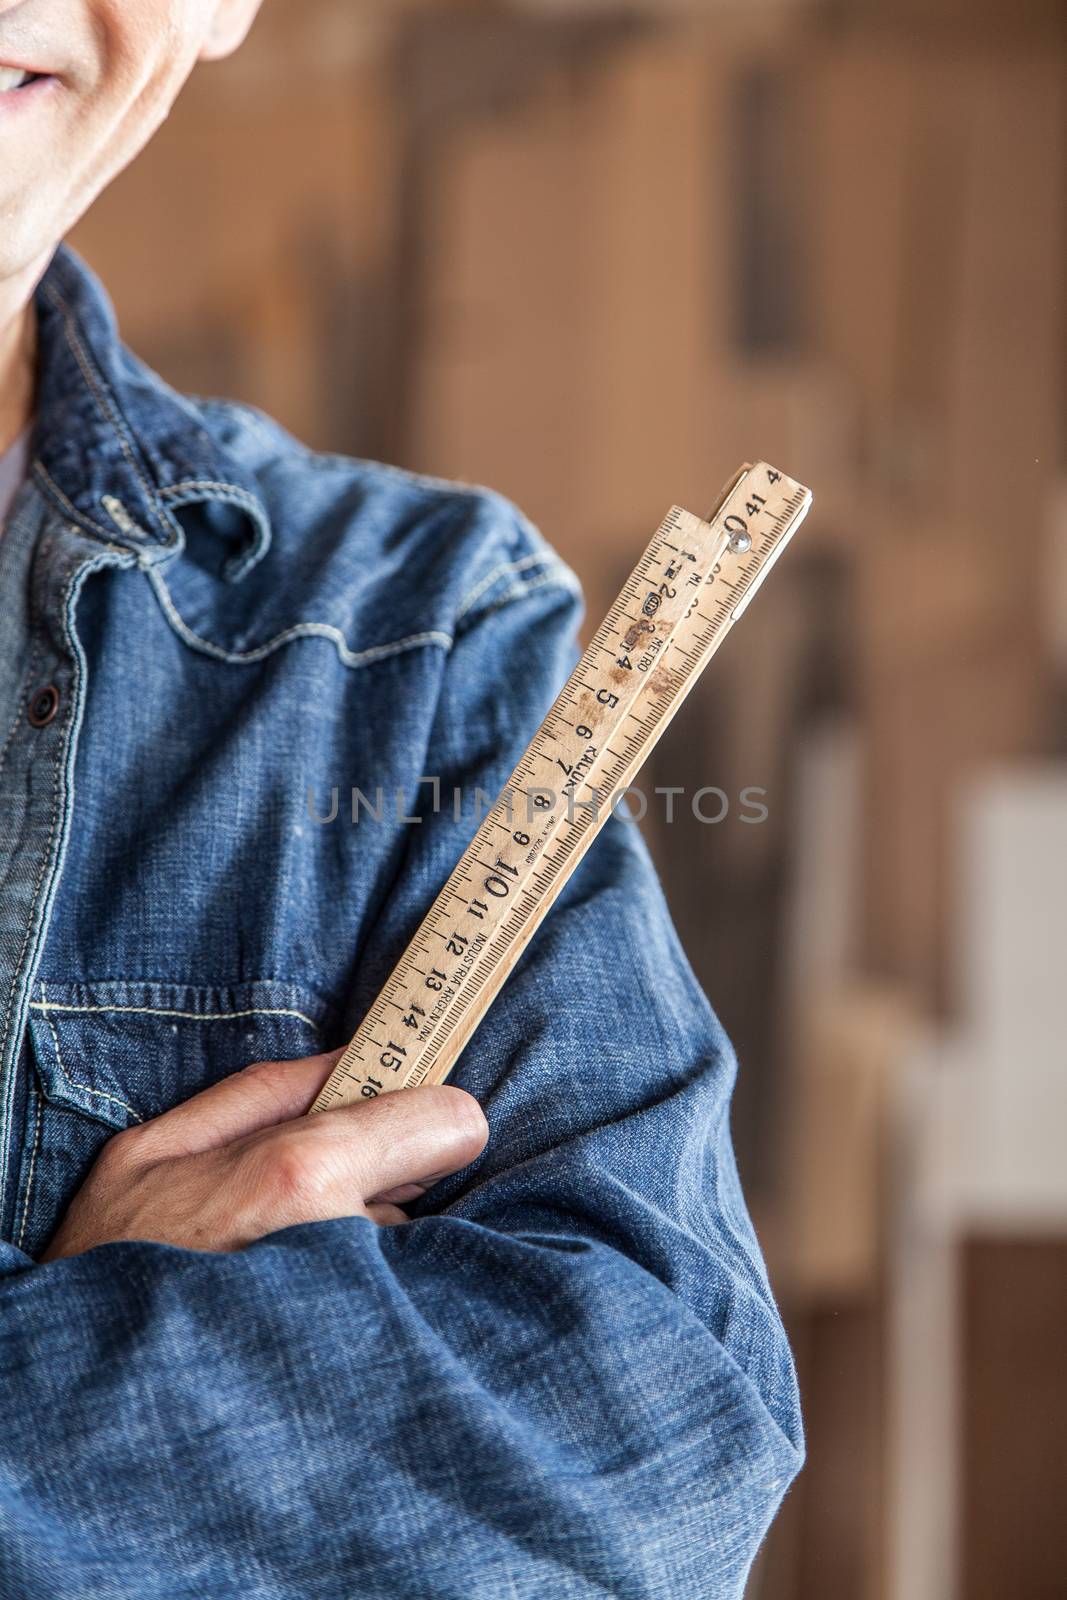 Carpenter holding a ruler